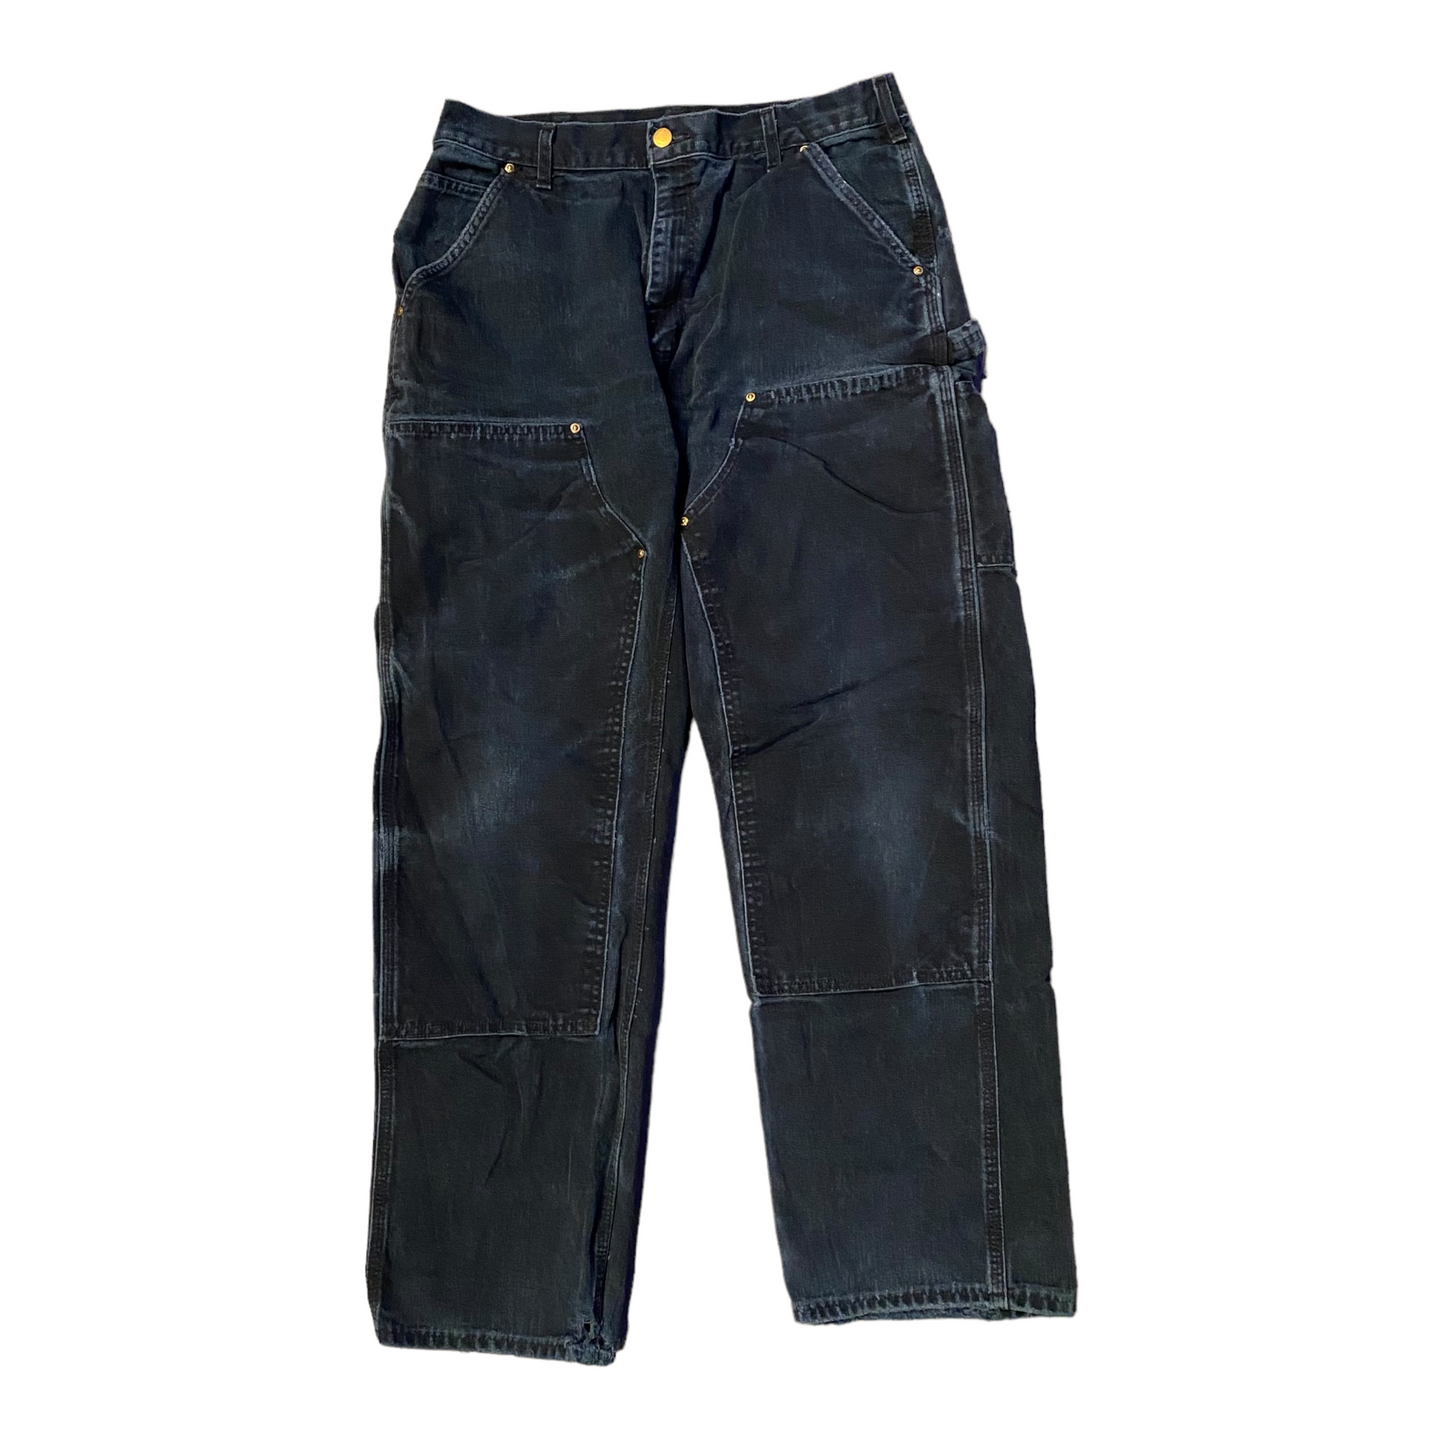 Vintage Carhartt double knee pants 32x30.5